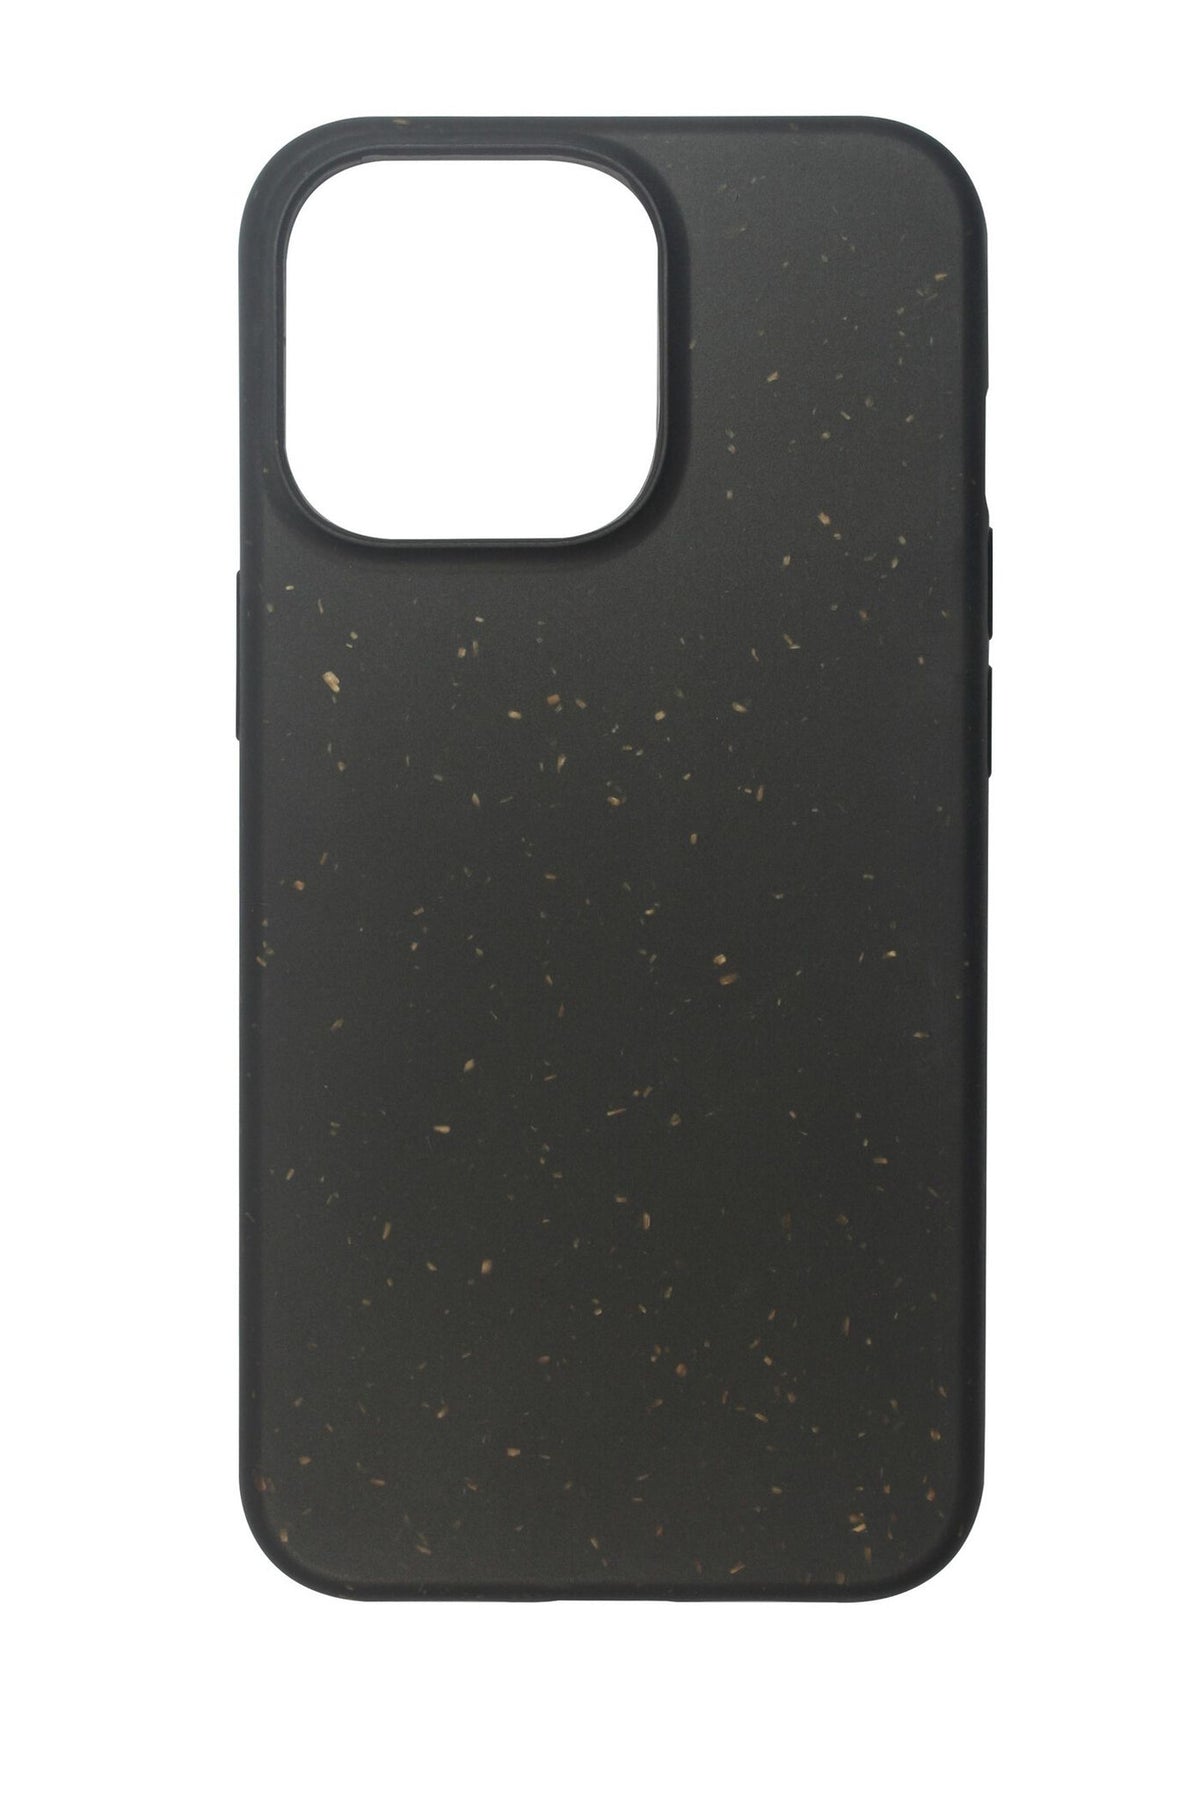 eSTUFF COPENHAGEN 100% Biodegradable mobile phone case for iPhone 13 Pro Max in Black